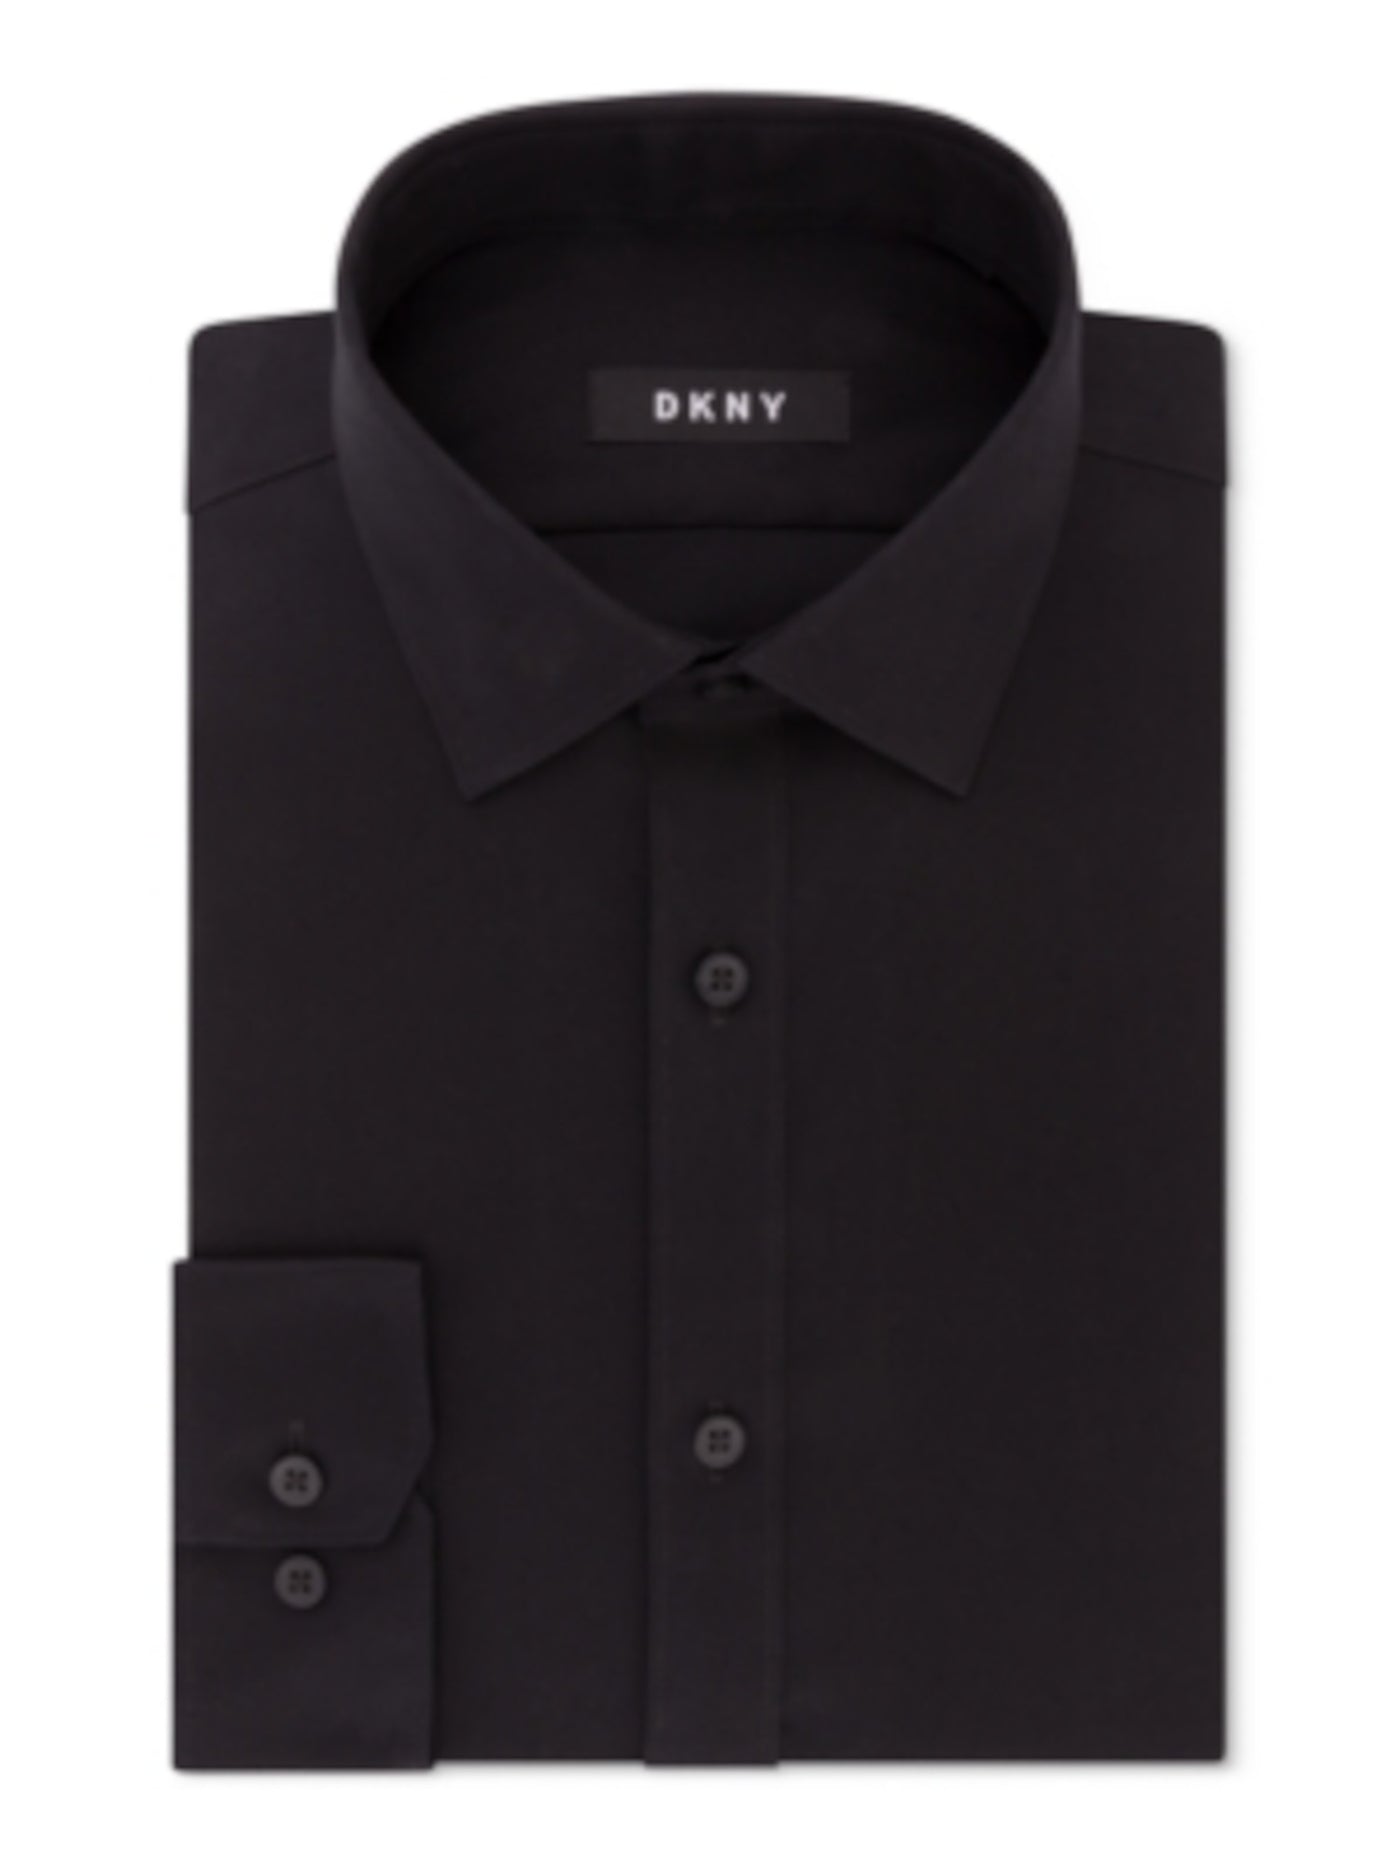 DKNY Mens Black Collared Slim Fit Cotton Dress Shirt 15.5- 34\35